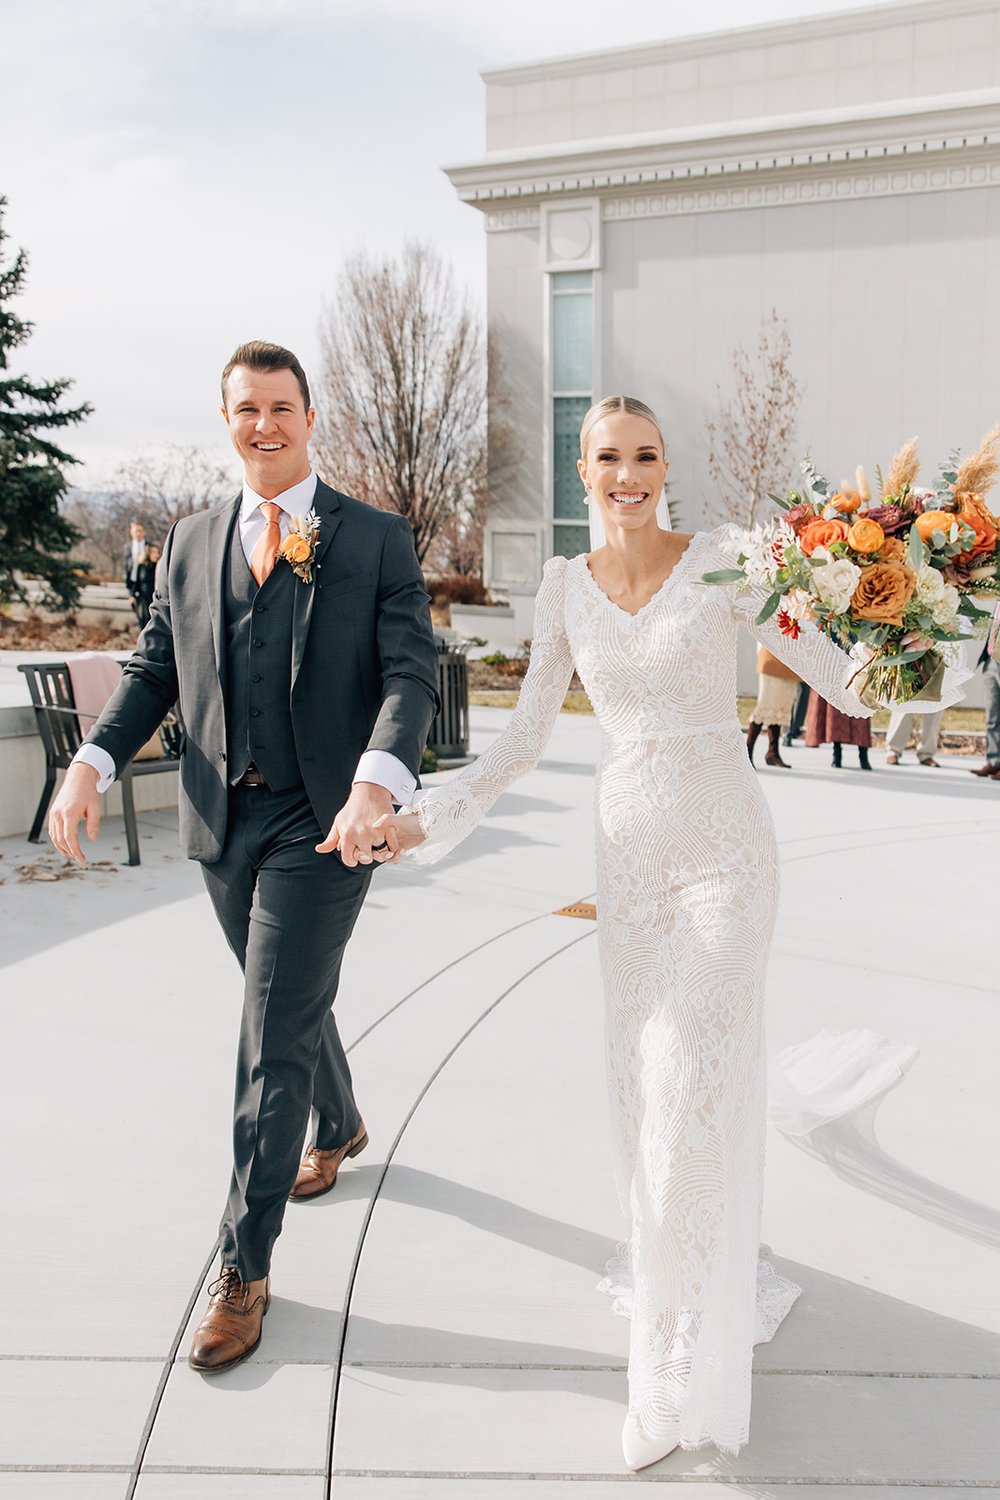 Anthology Print Wedding Invitations - Utah Wedding Venue - Utah Wedding Photographer - Boho Fall Wedding Inspiration - Utah Wedding Planner - River Bridge Wedding Venue5 (3).jpg